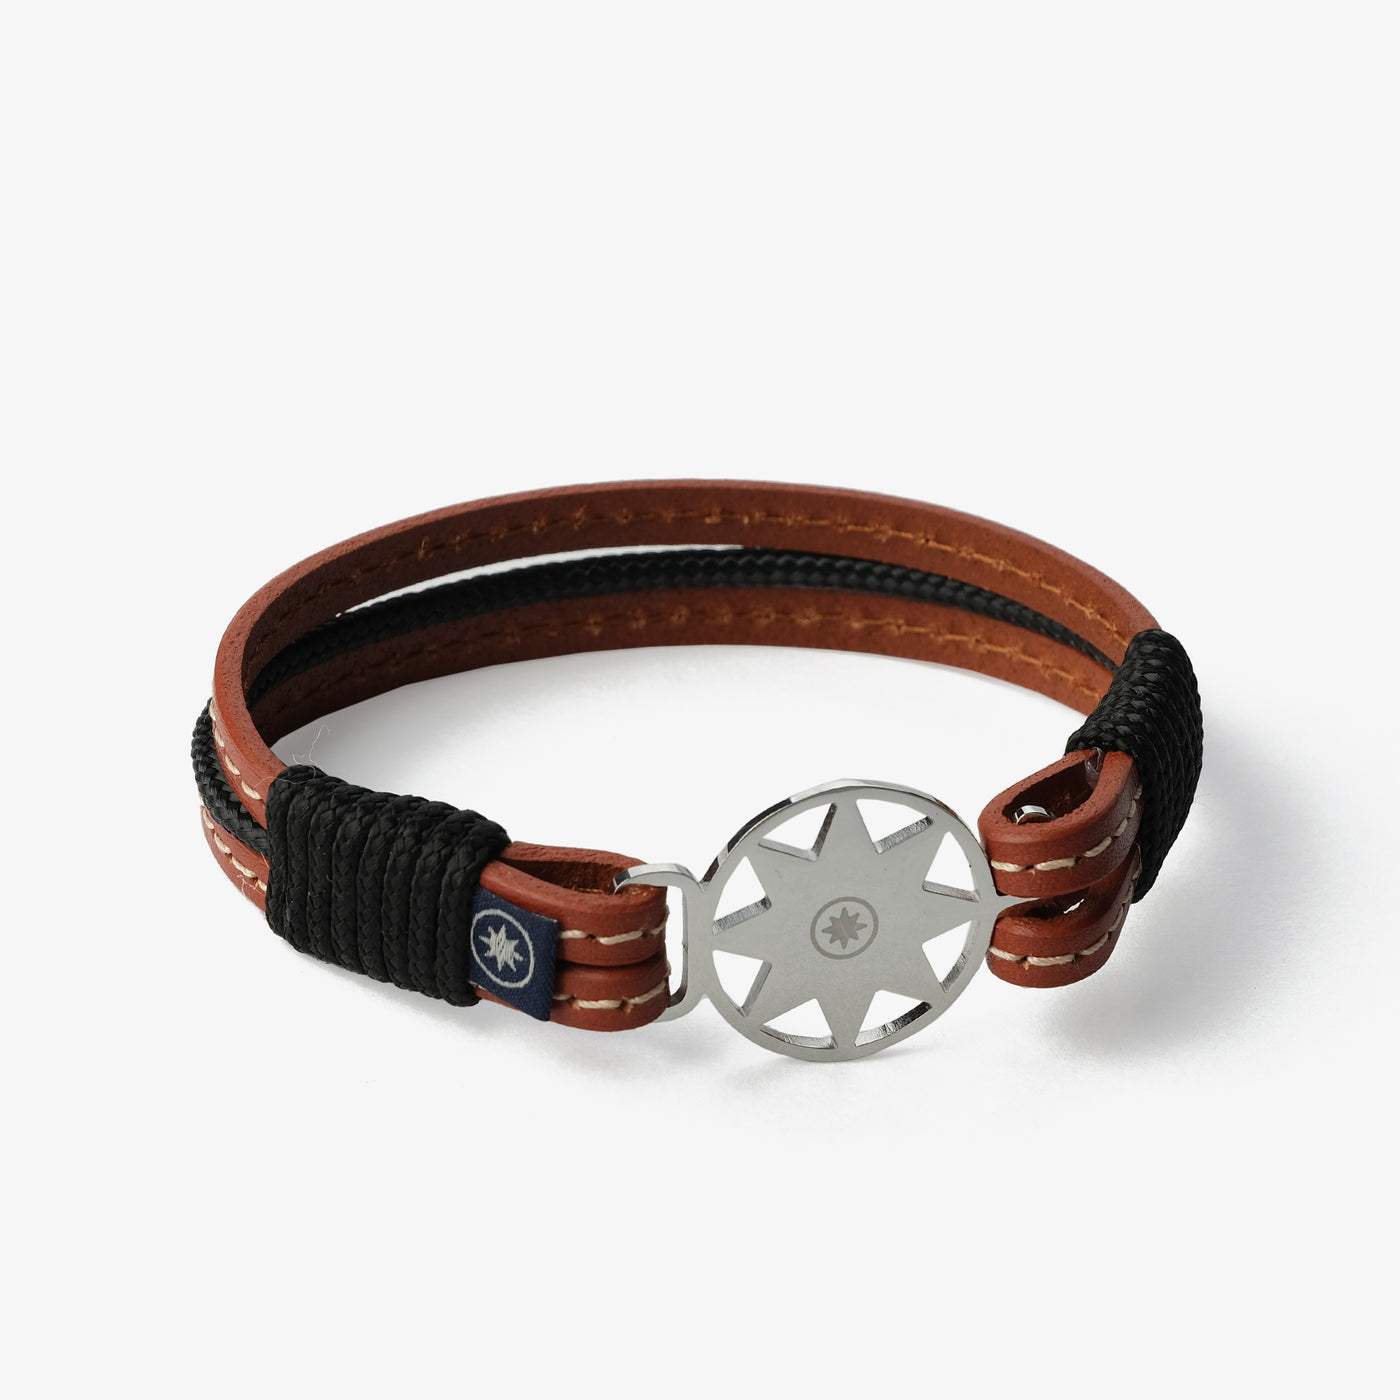 Earth's Embrace Stitched Leather Bracelet